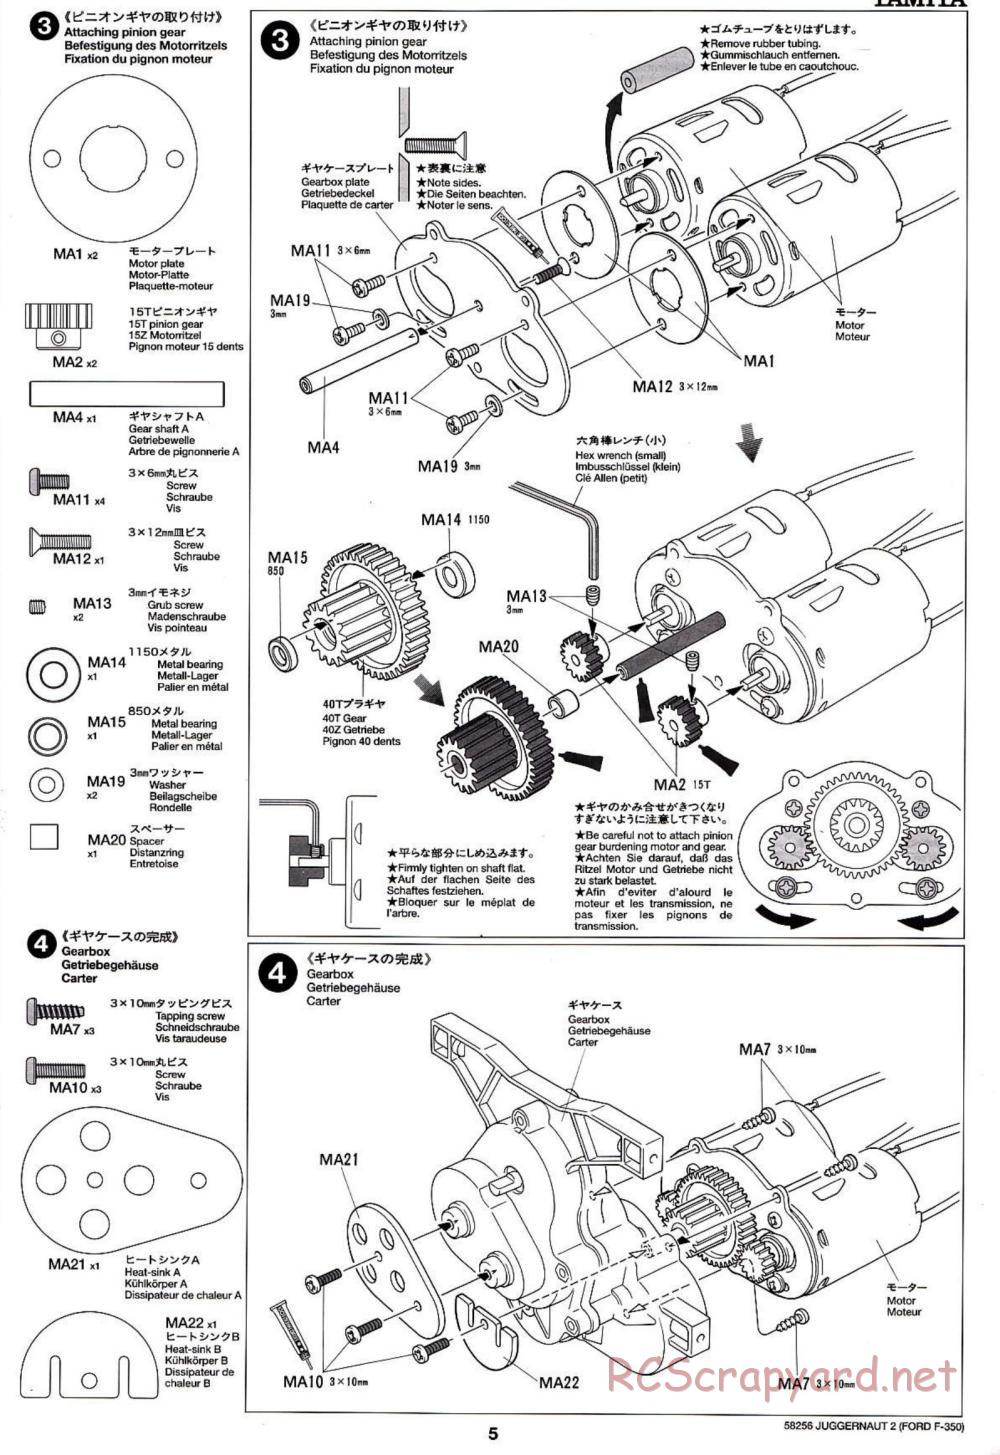 Tamiya - Juggernaut 2 Chassis - Manual - Page 5